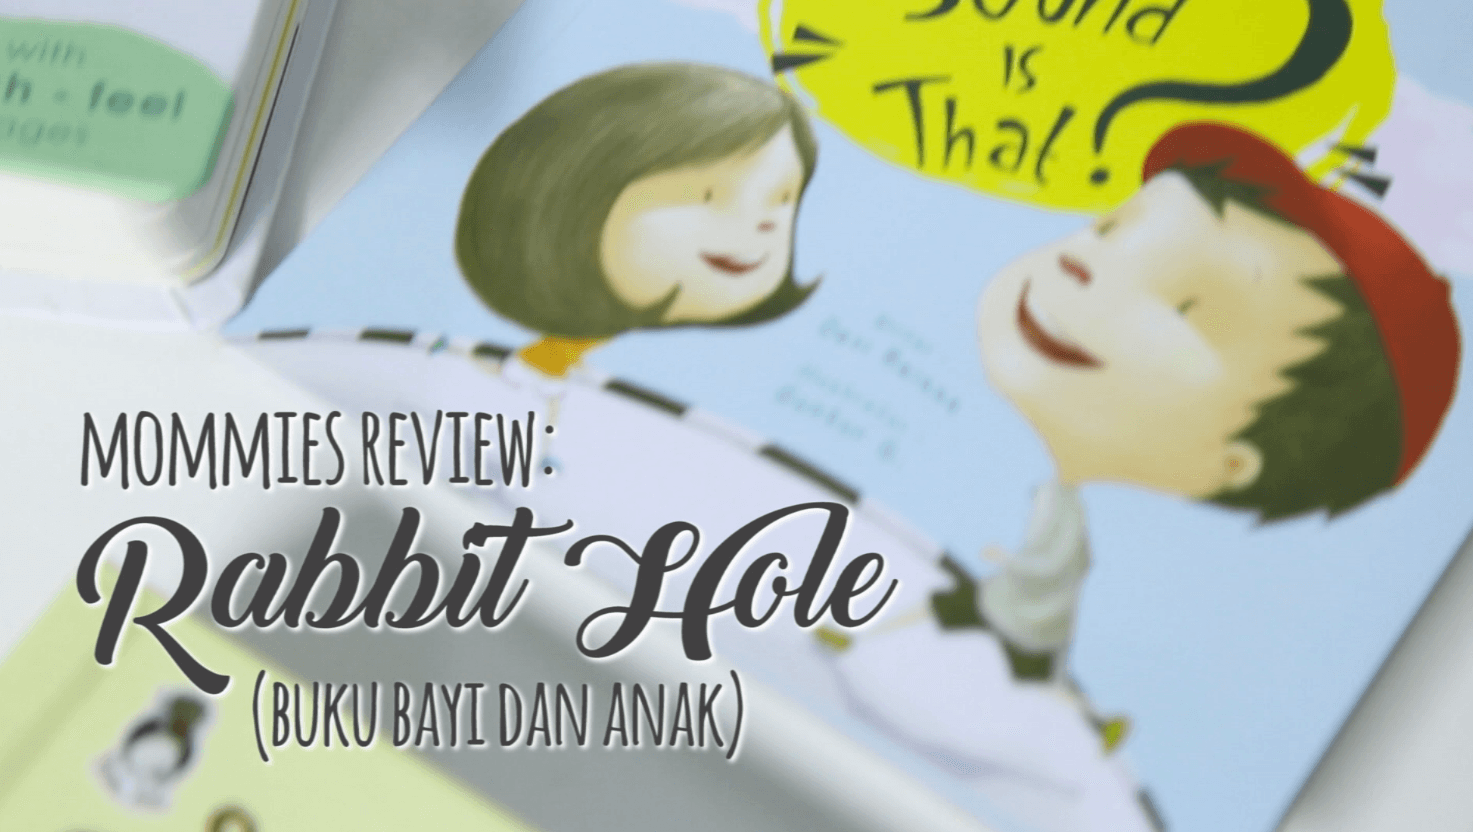 Mommies Review: Rabbit Hole (Buku Bayi dan Anak)